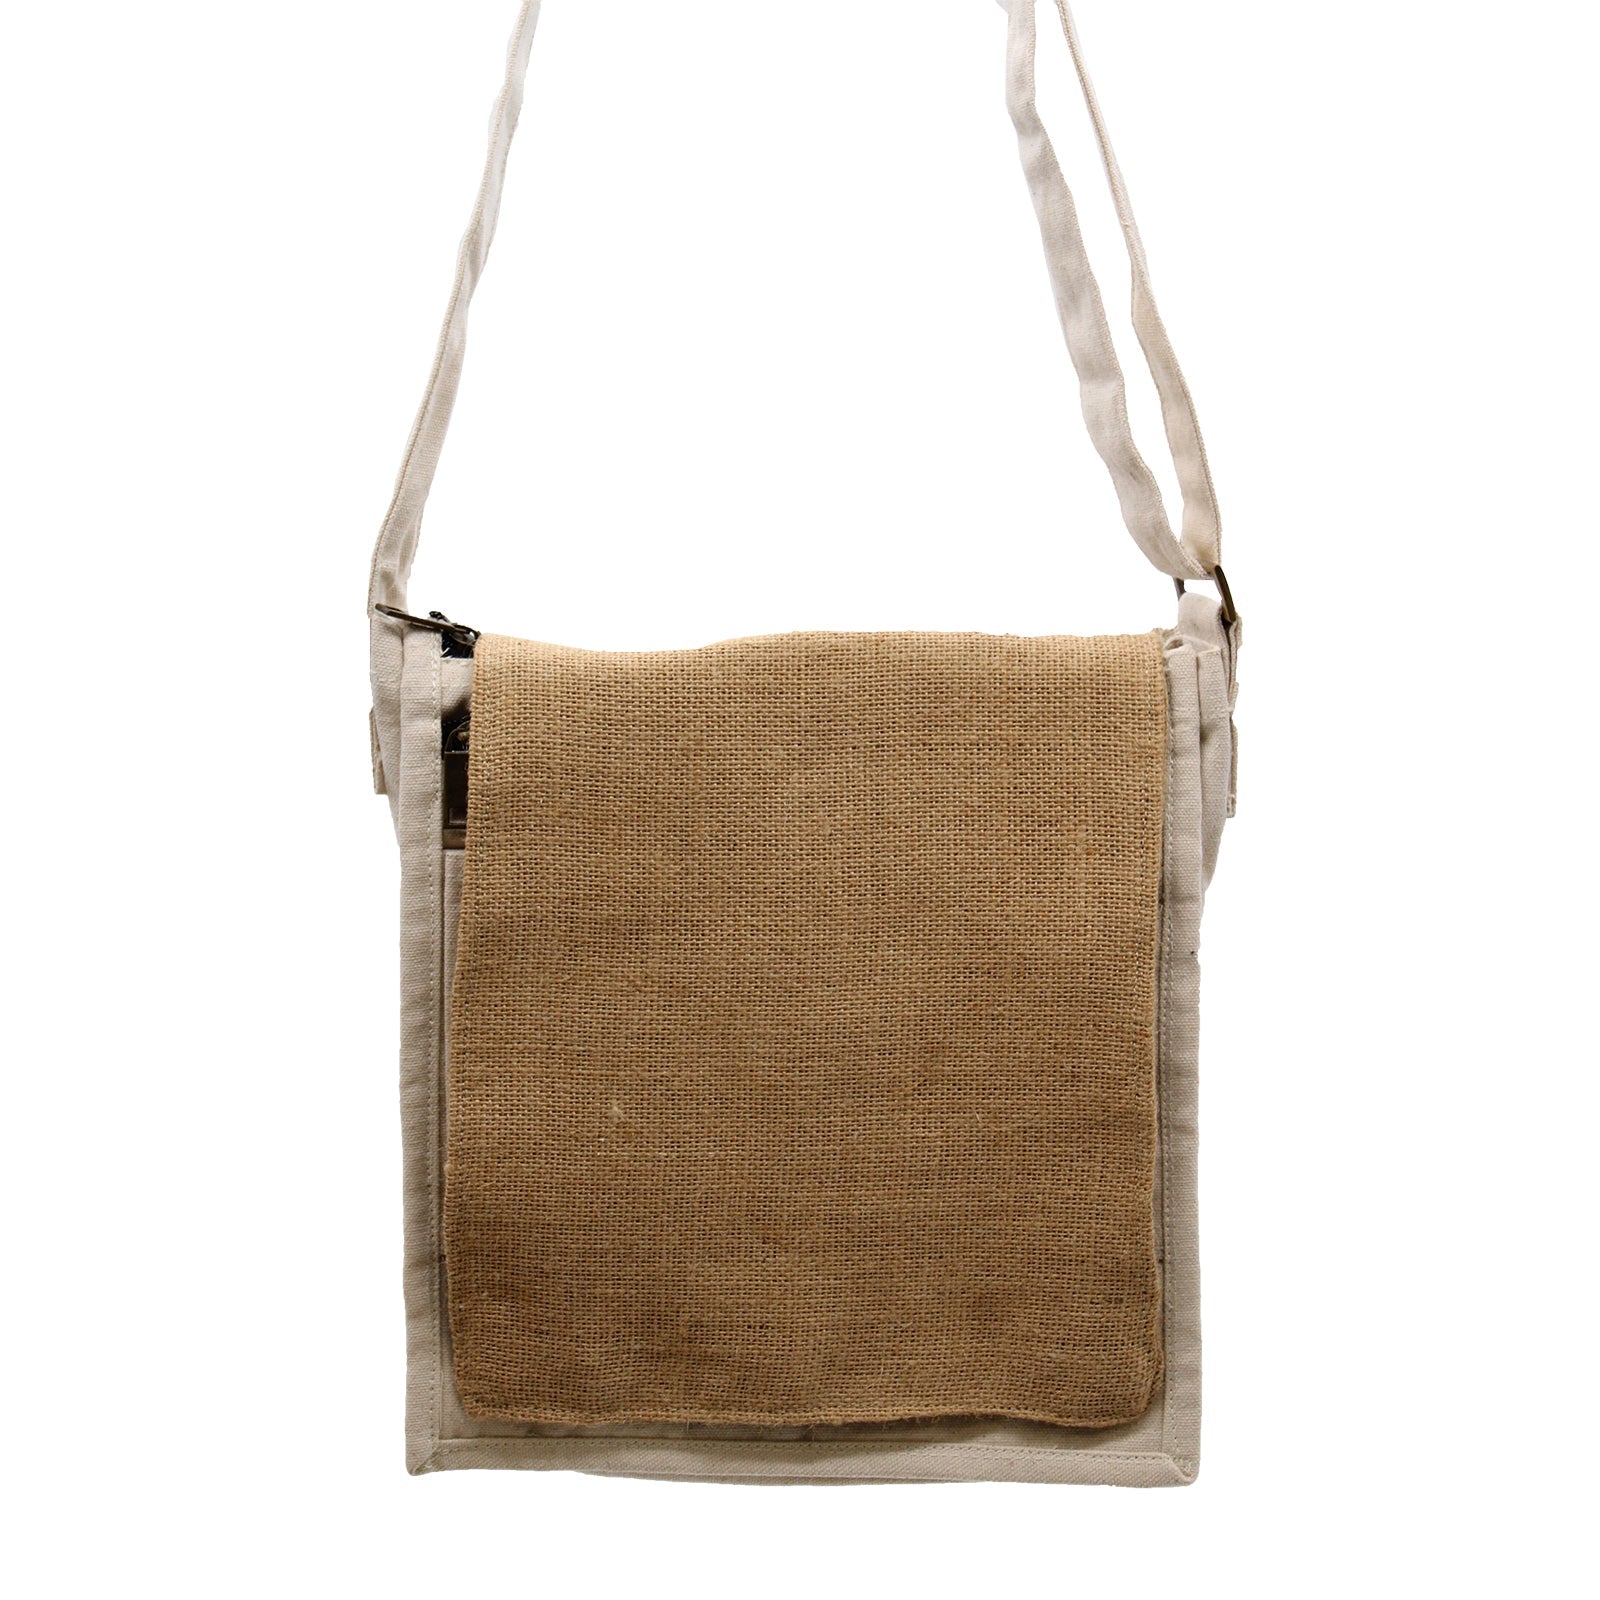 Cotton Canvas Messenger Bag - Natural and Soft Jute - £35.0 - 